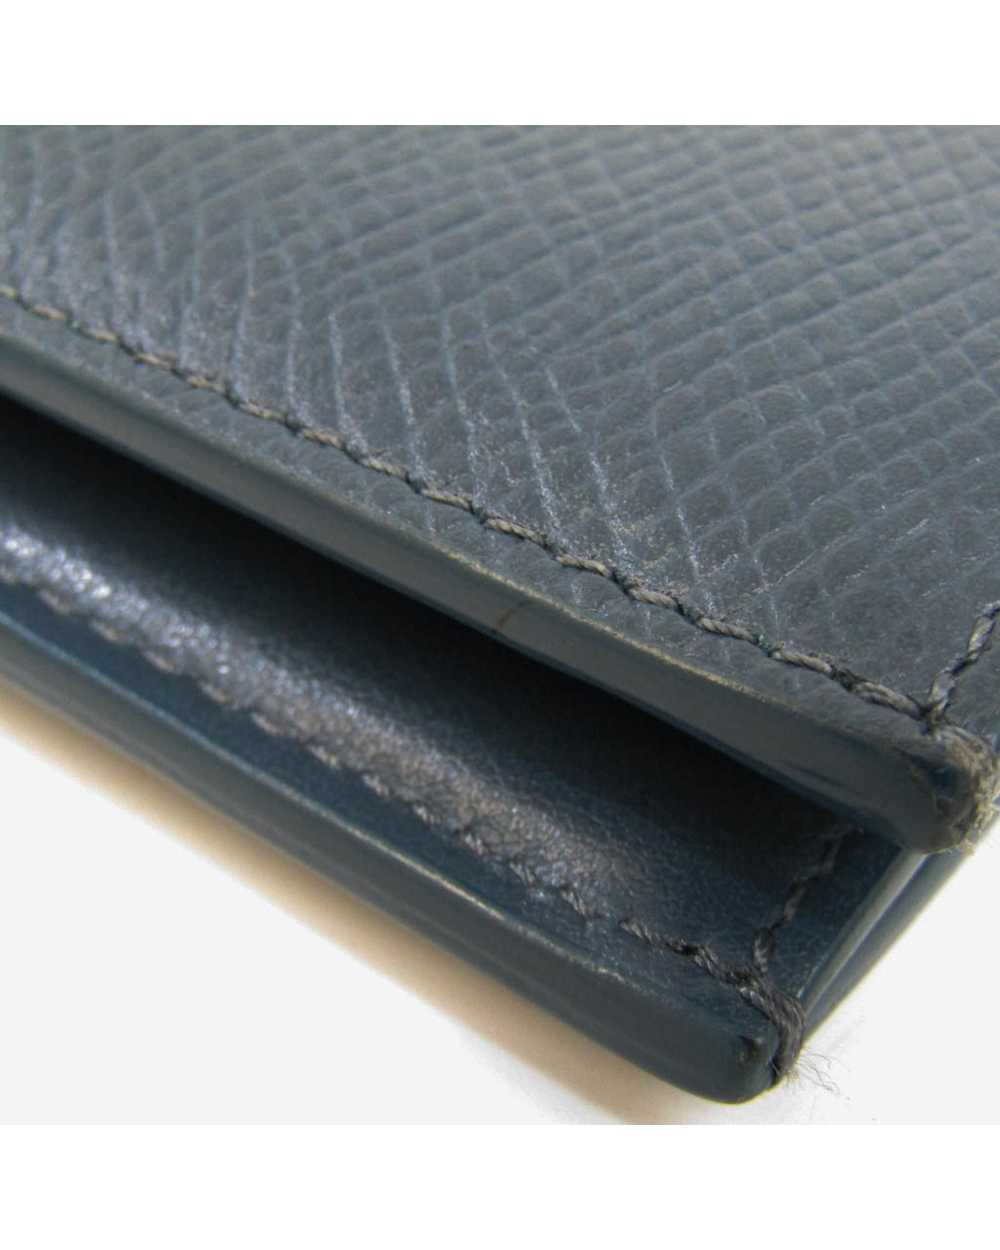 Celine Navy Leather Wallet - Practical and Elegant - image 7